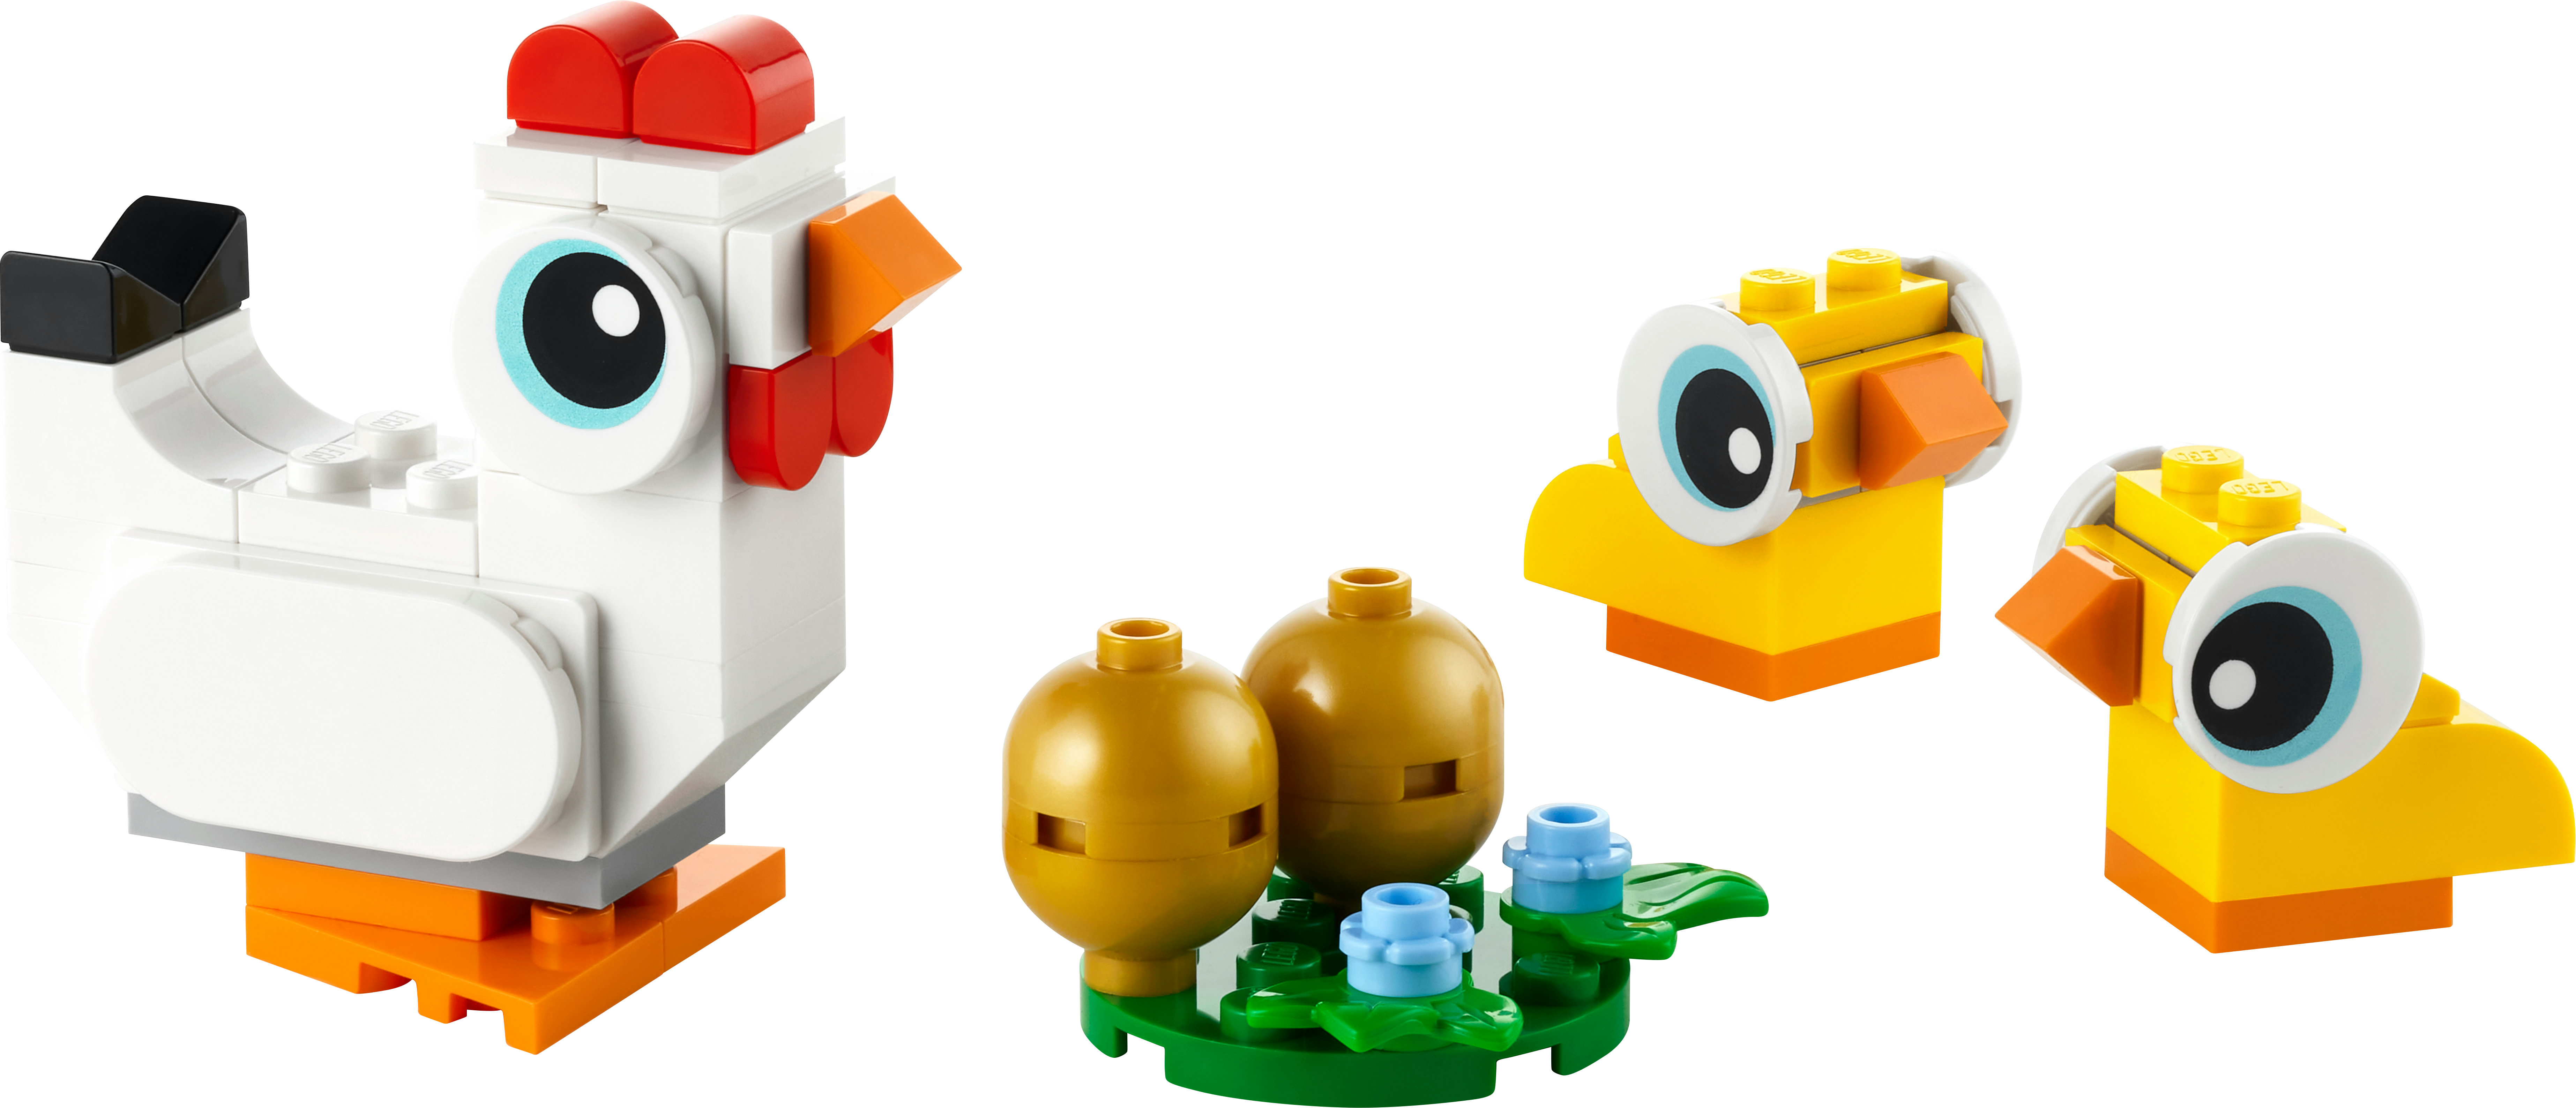 LEGO Creator Oster-Hühner Bausatz, 30643 Mehrfarbig